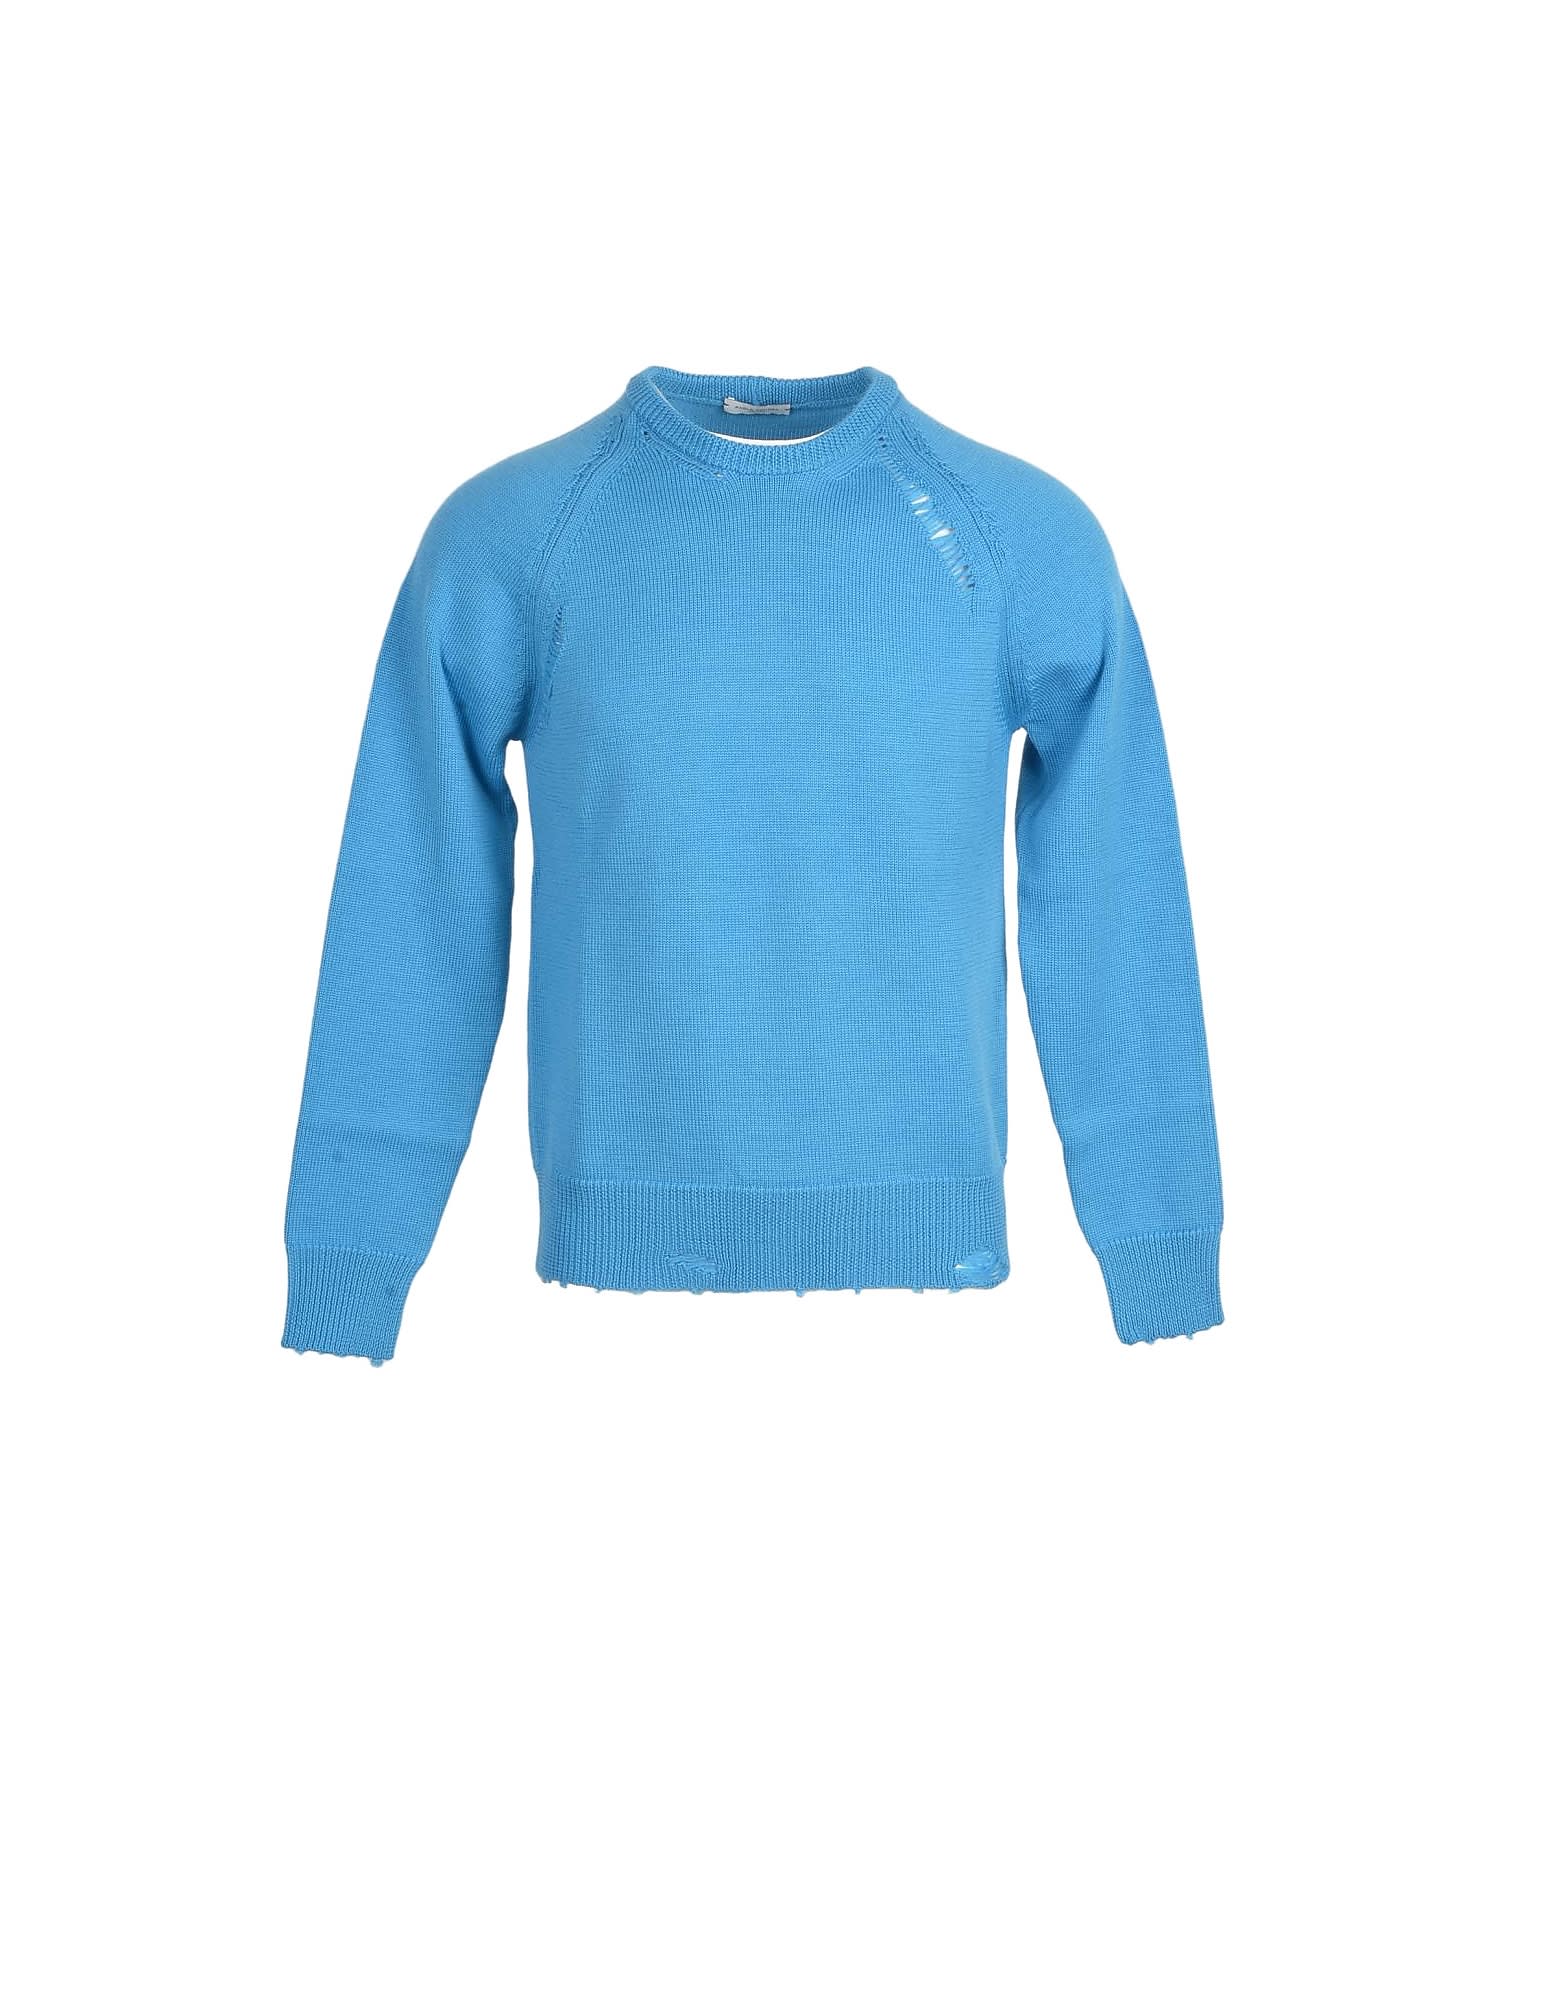 Paolo Pecora Mens Light Blue Sweater